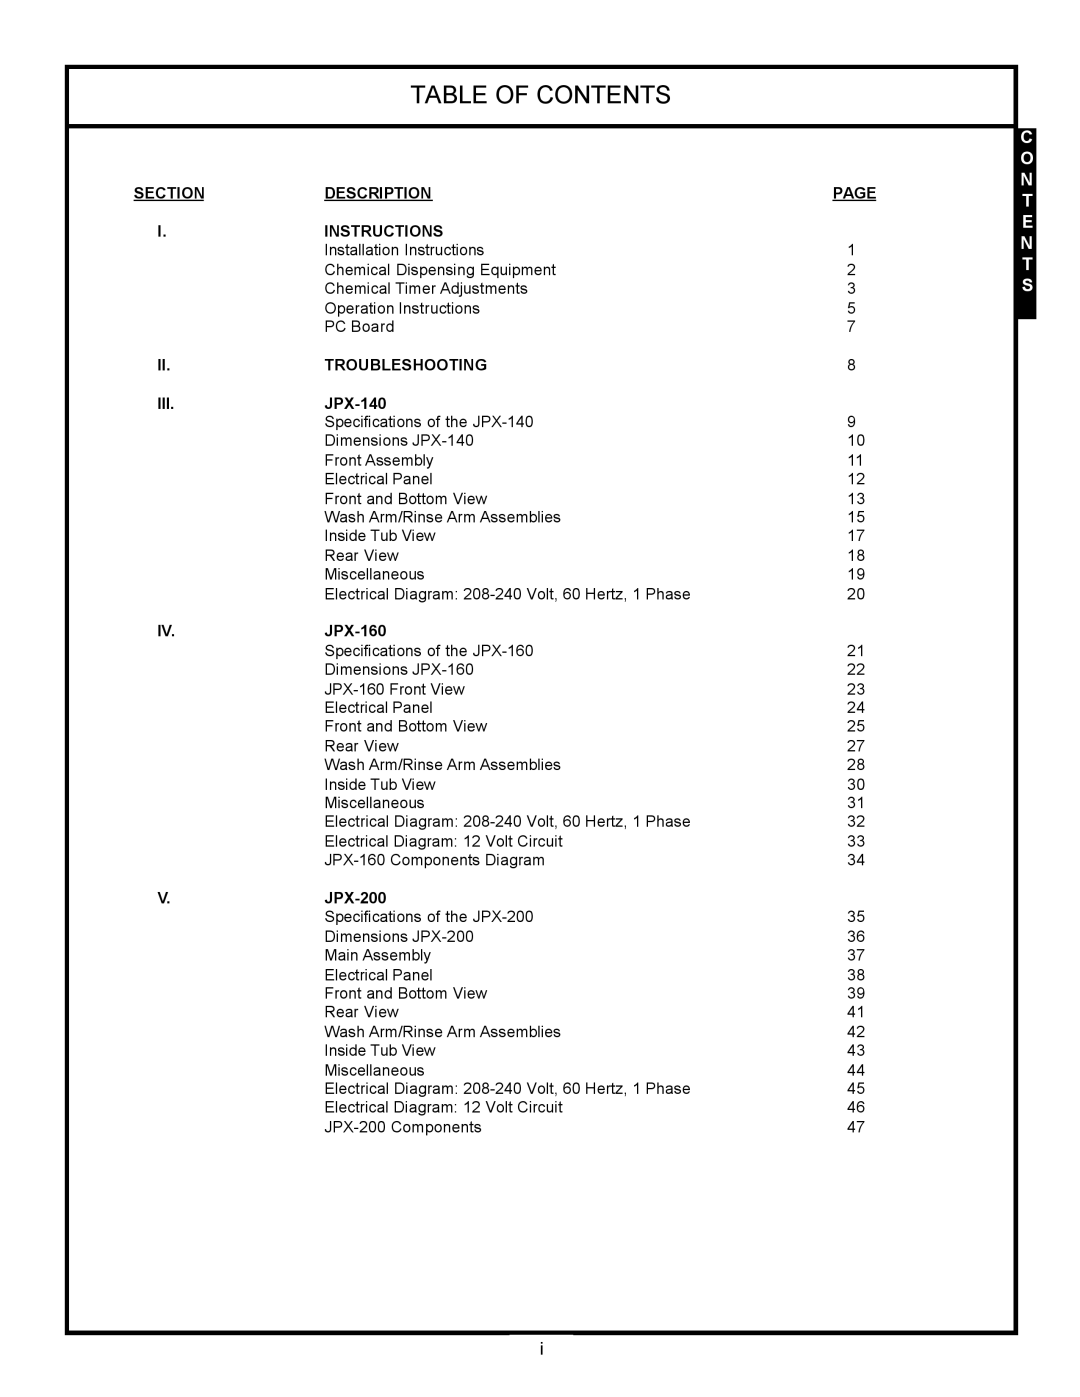 Jackson JPX-200 Table Of Contents, C O N T E N T S, Section, Description, Page, Instructions, Troubleshooting, JPX-140 